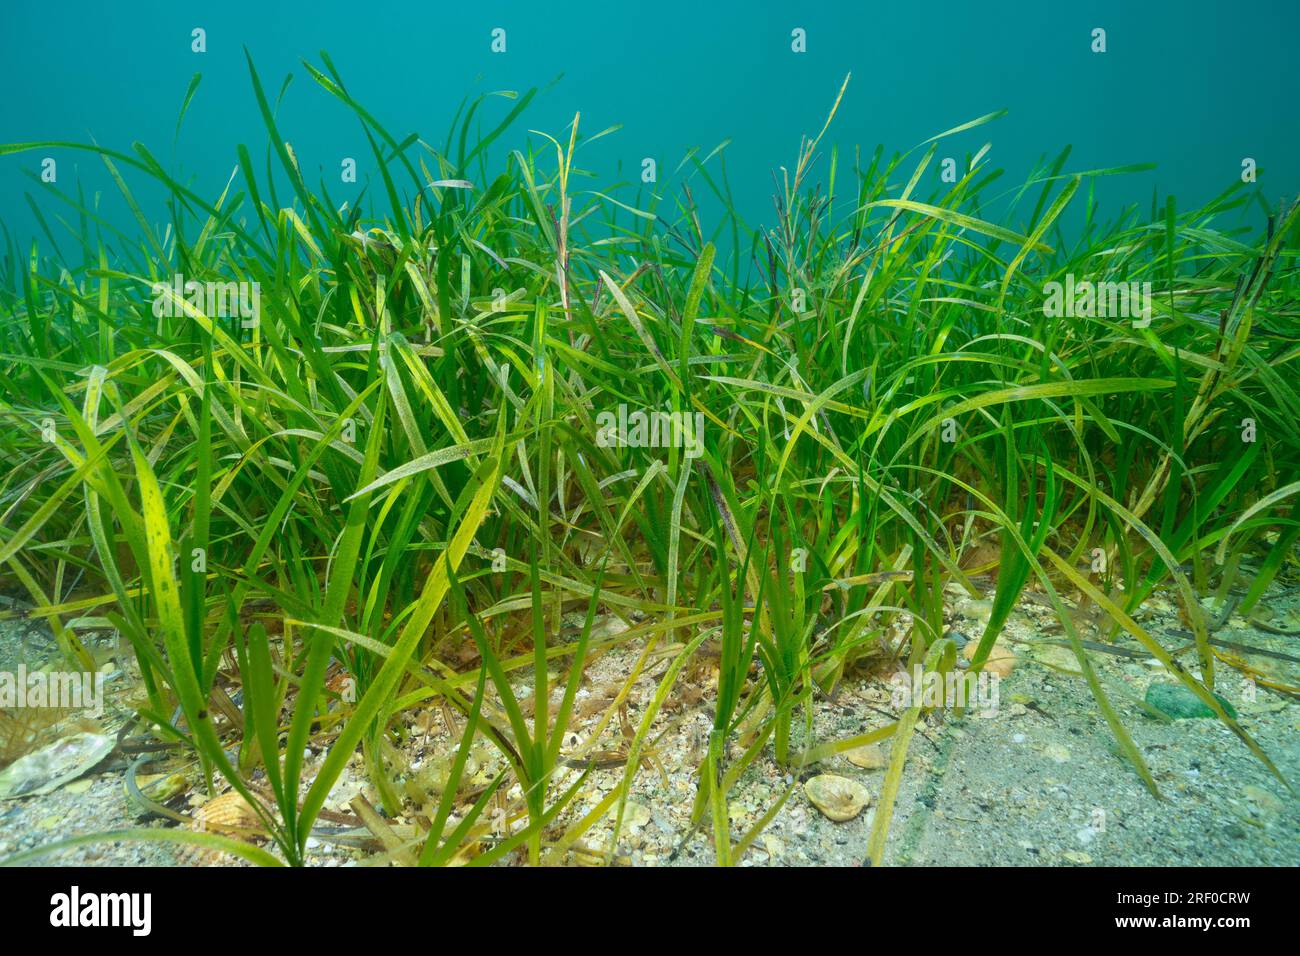 Eelgrass seagrass, Zostera marina, underwater in the Atlantic ocean, natural scene, Spain, Galicia Stock Photo